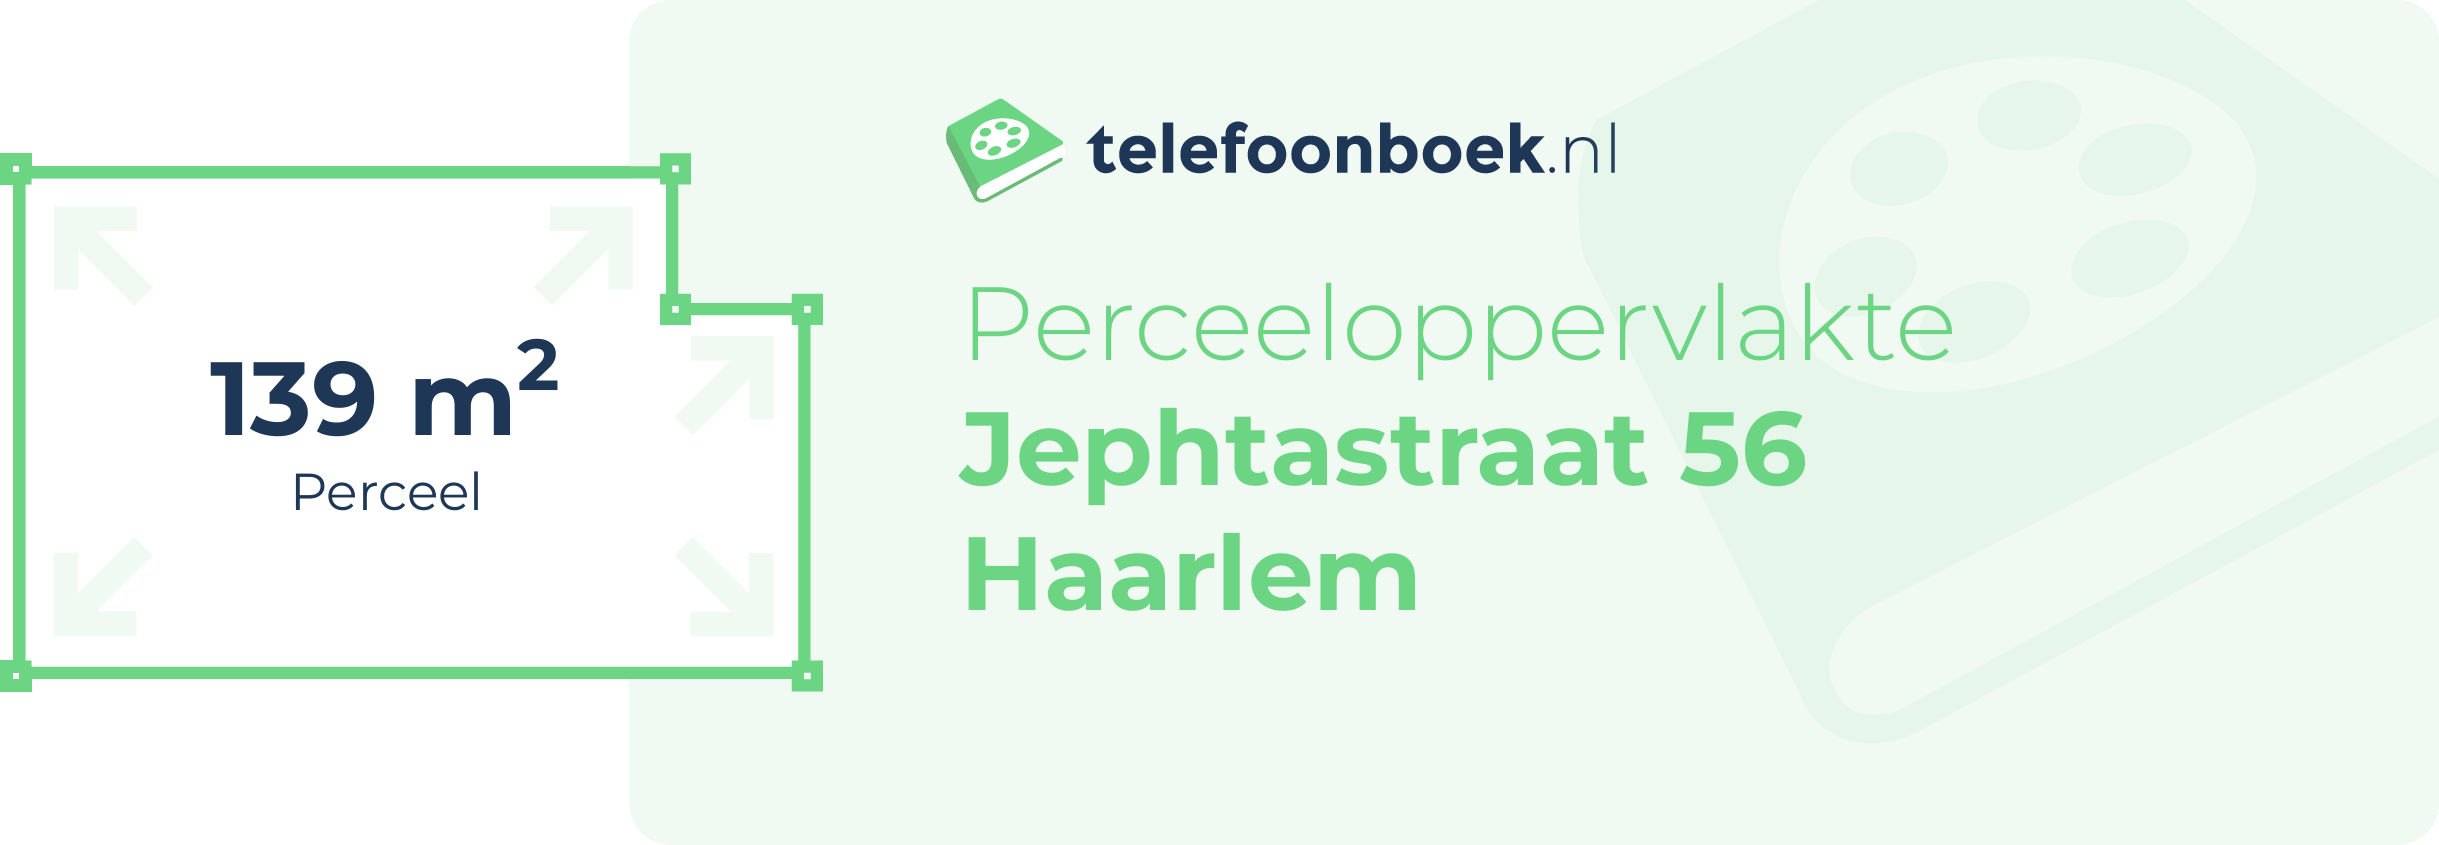 Perceeloppervlakte Jephtastraat 56 Haarlem